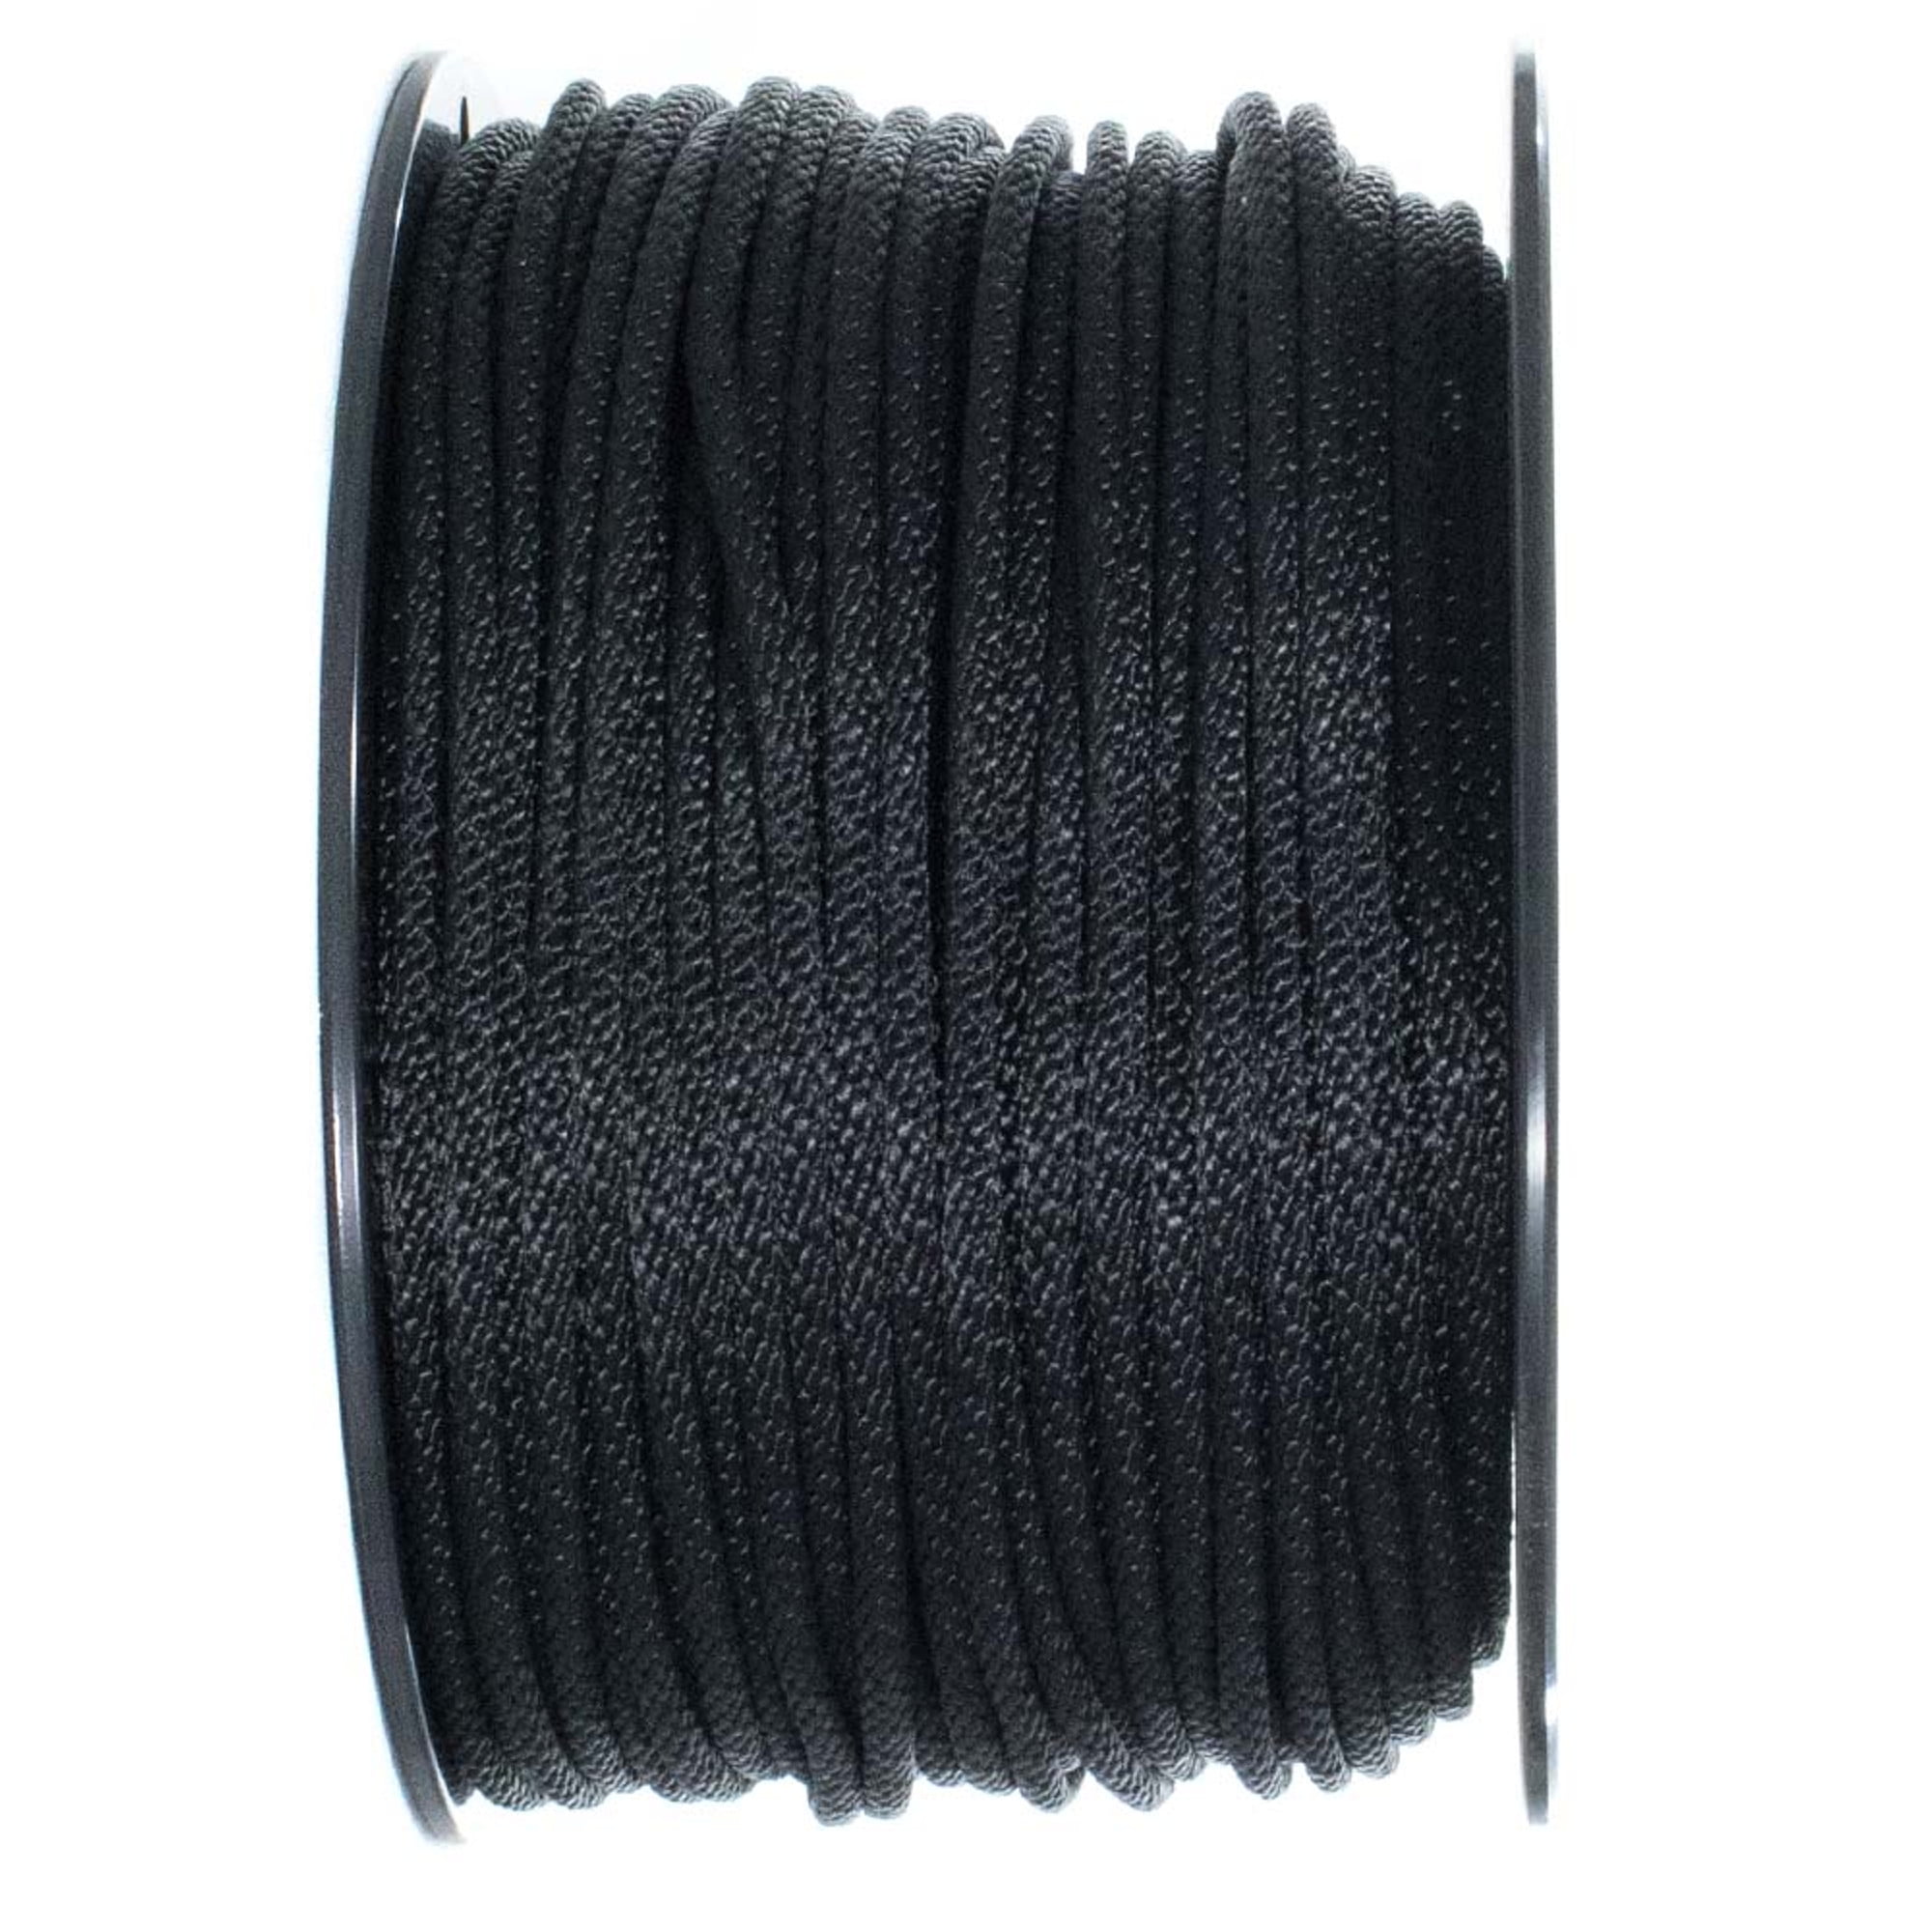 Golberg Solid Braid Black or White Nylon Rope 1/8-inch, 3/16-inch